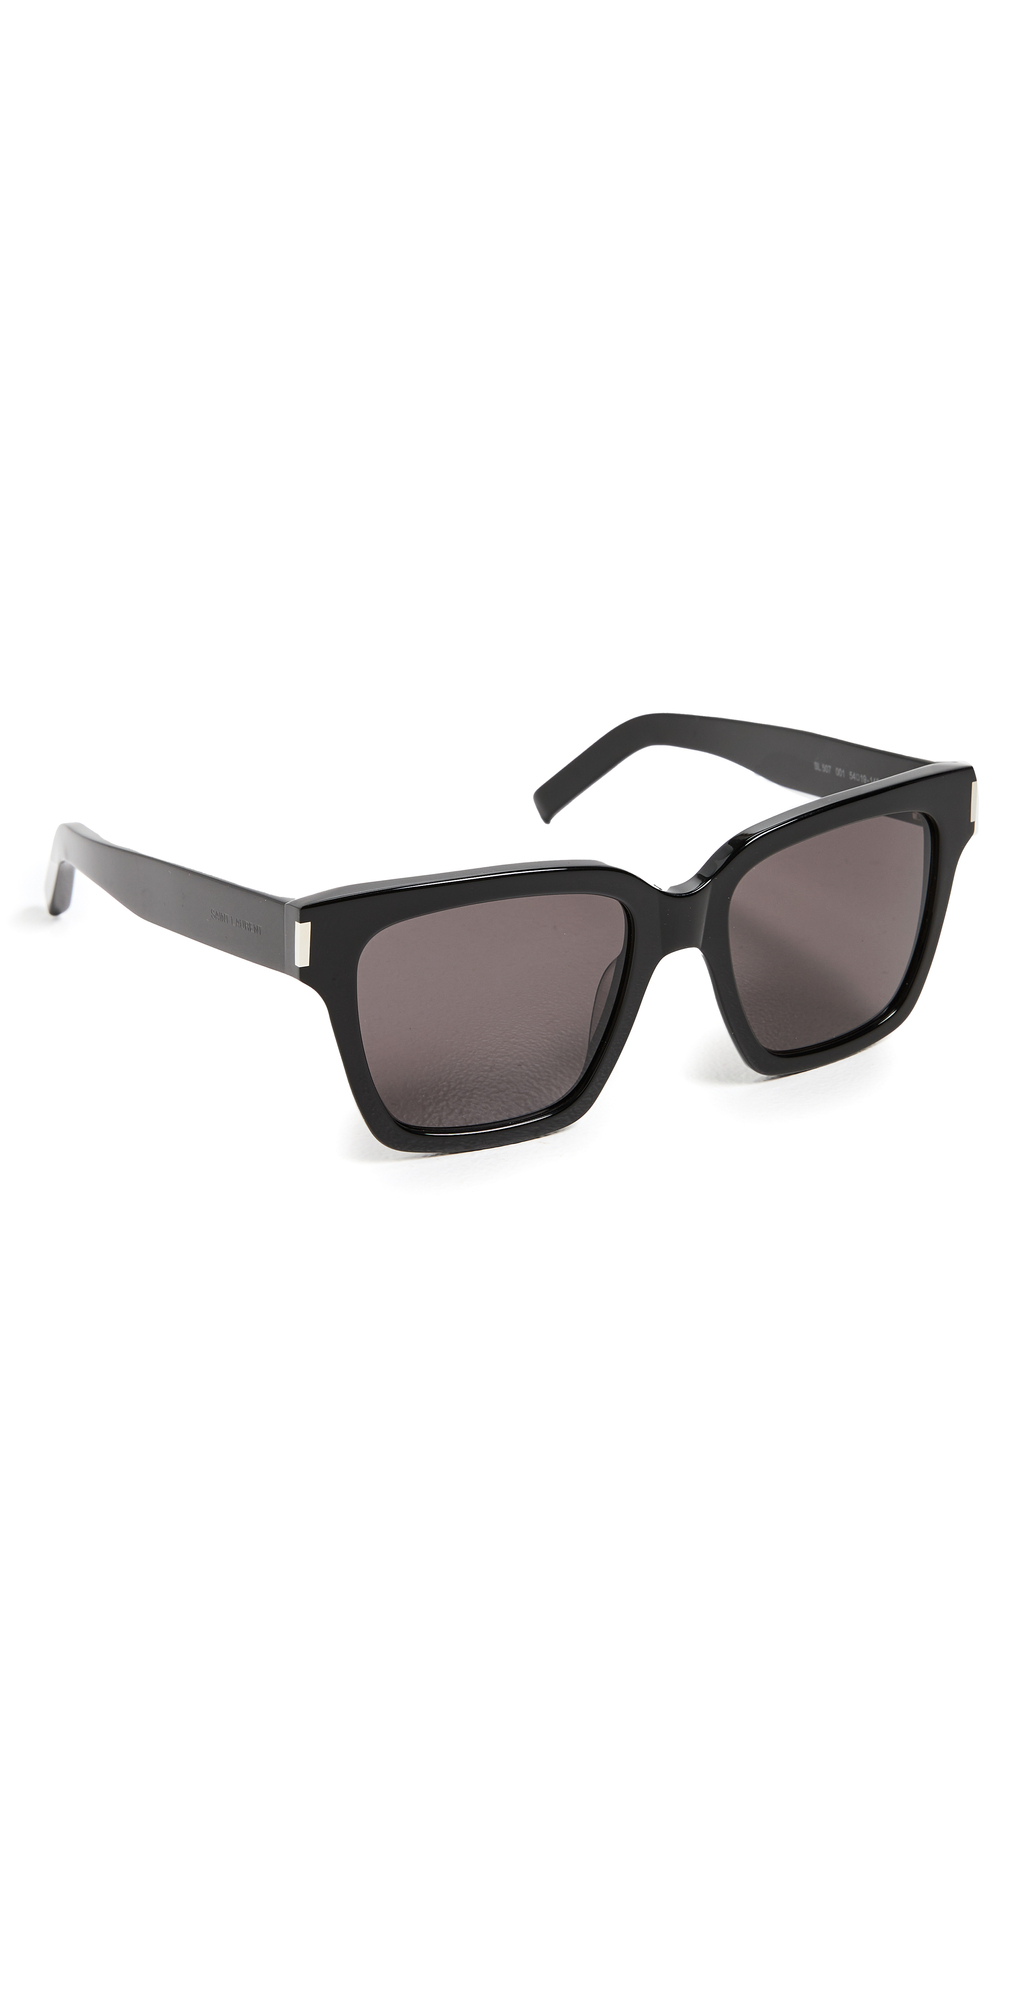 Saint Laurent SL 507 Sunglasses in black / grey